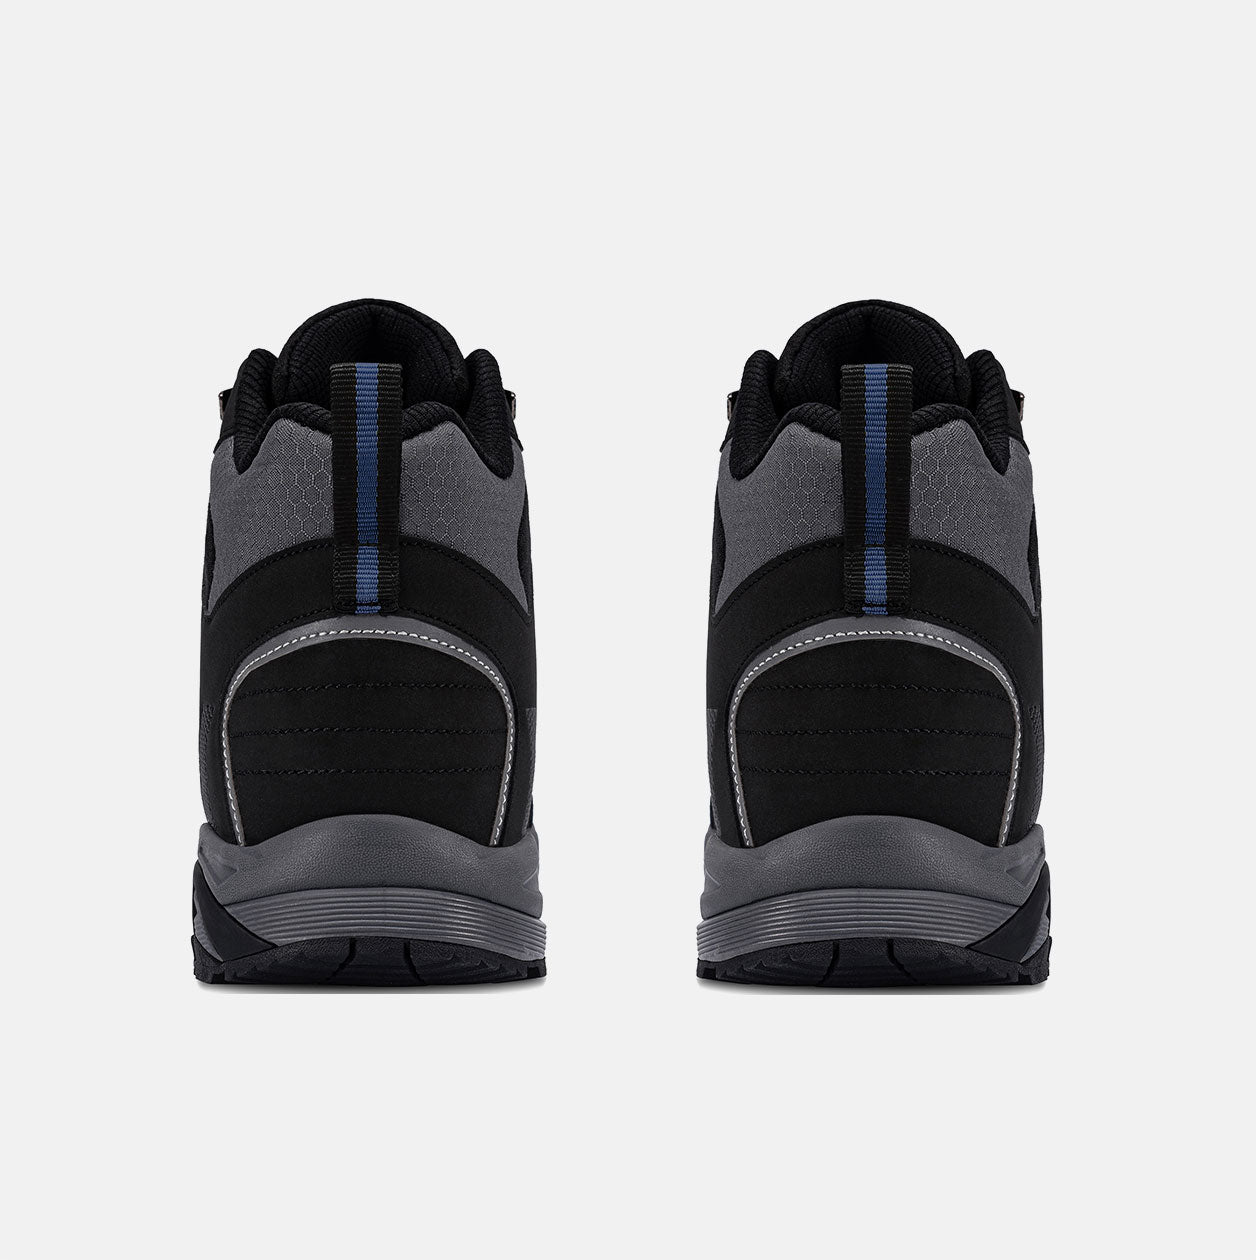 Larnmern Steel Toe Safety Work Boots Lightweight Slip Resistant Work shoes For Men,#170202